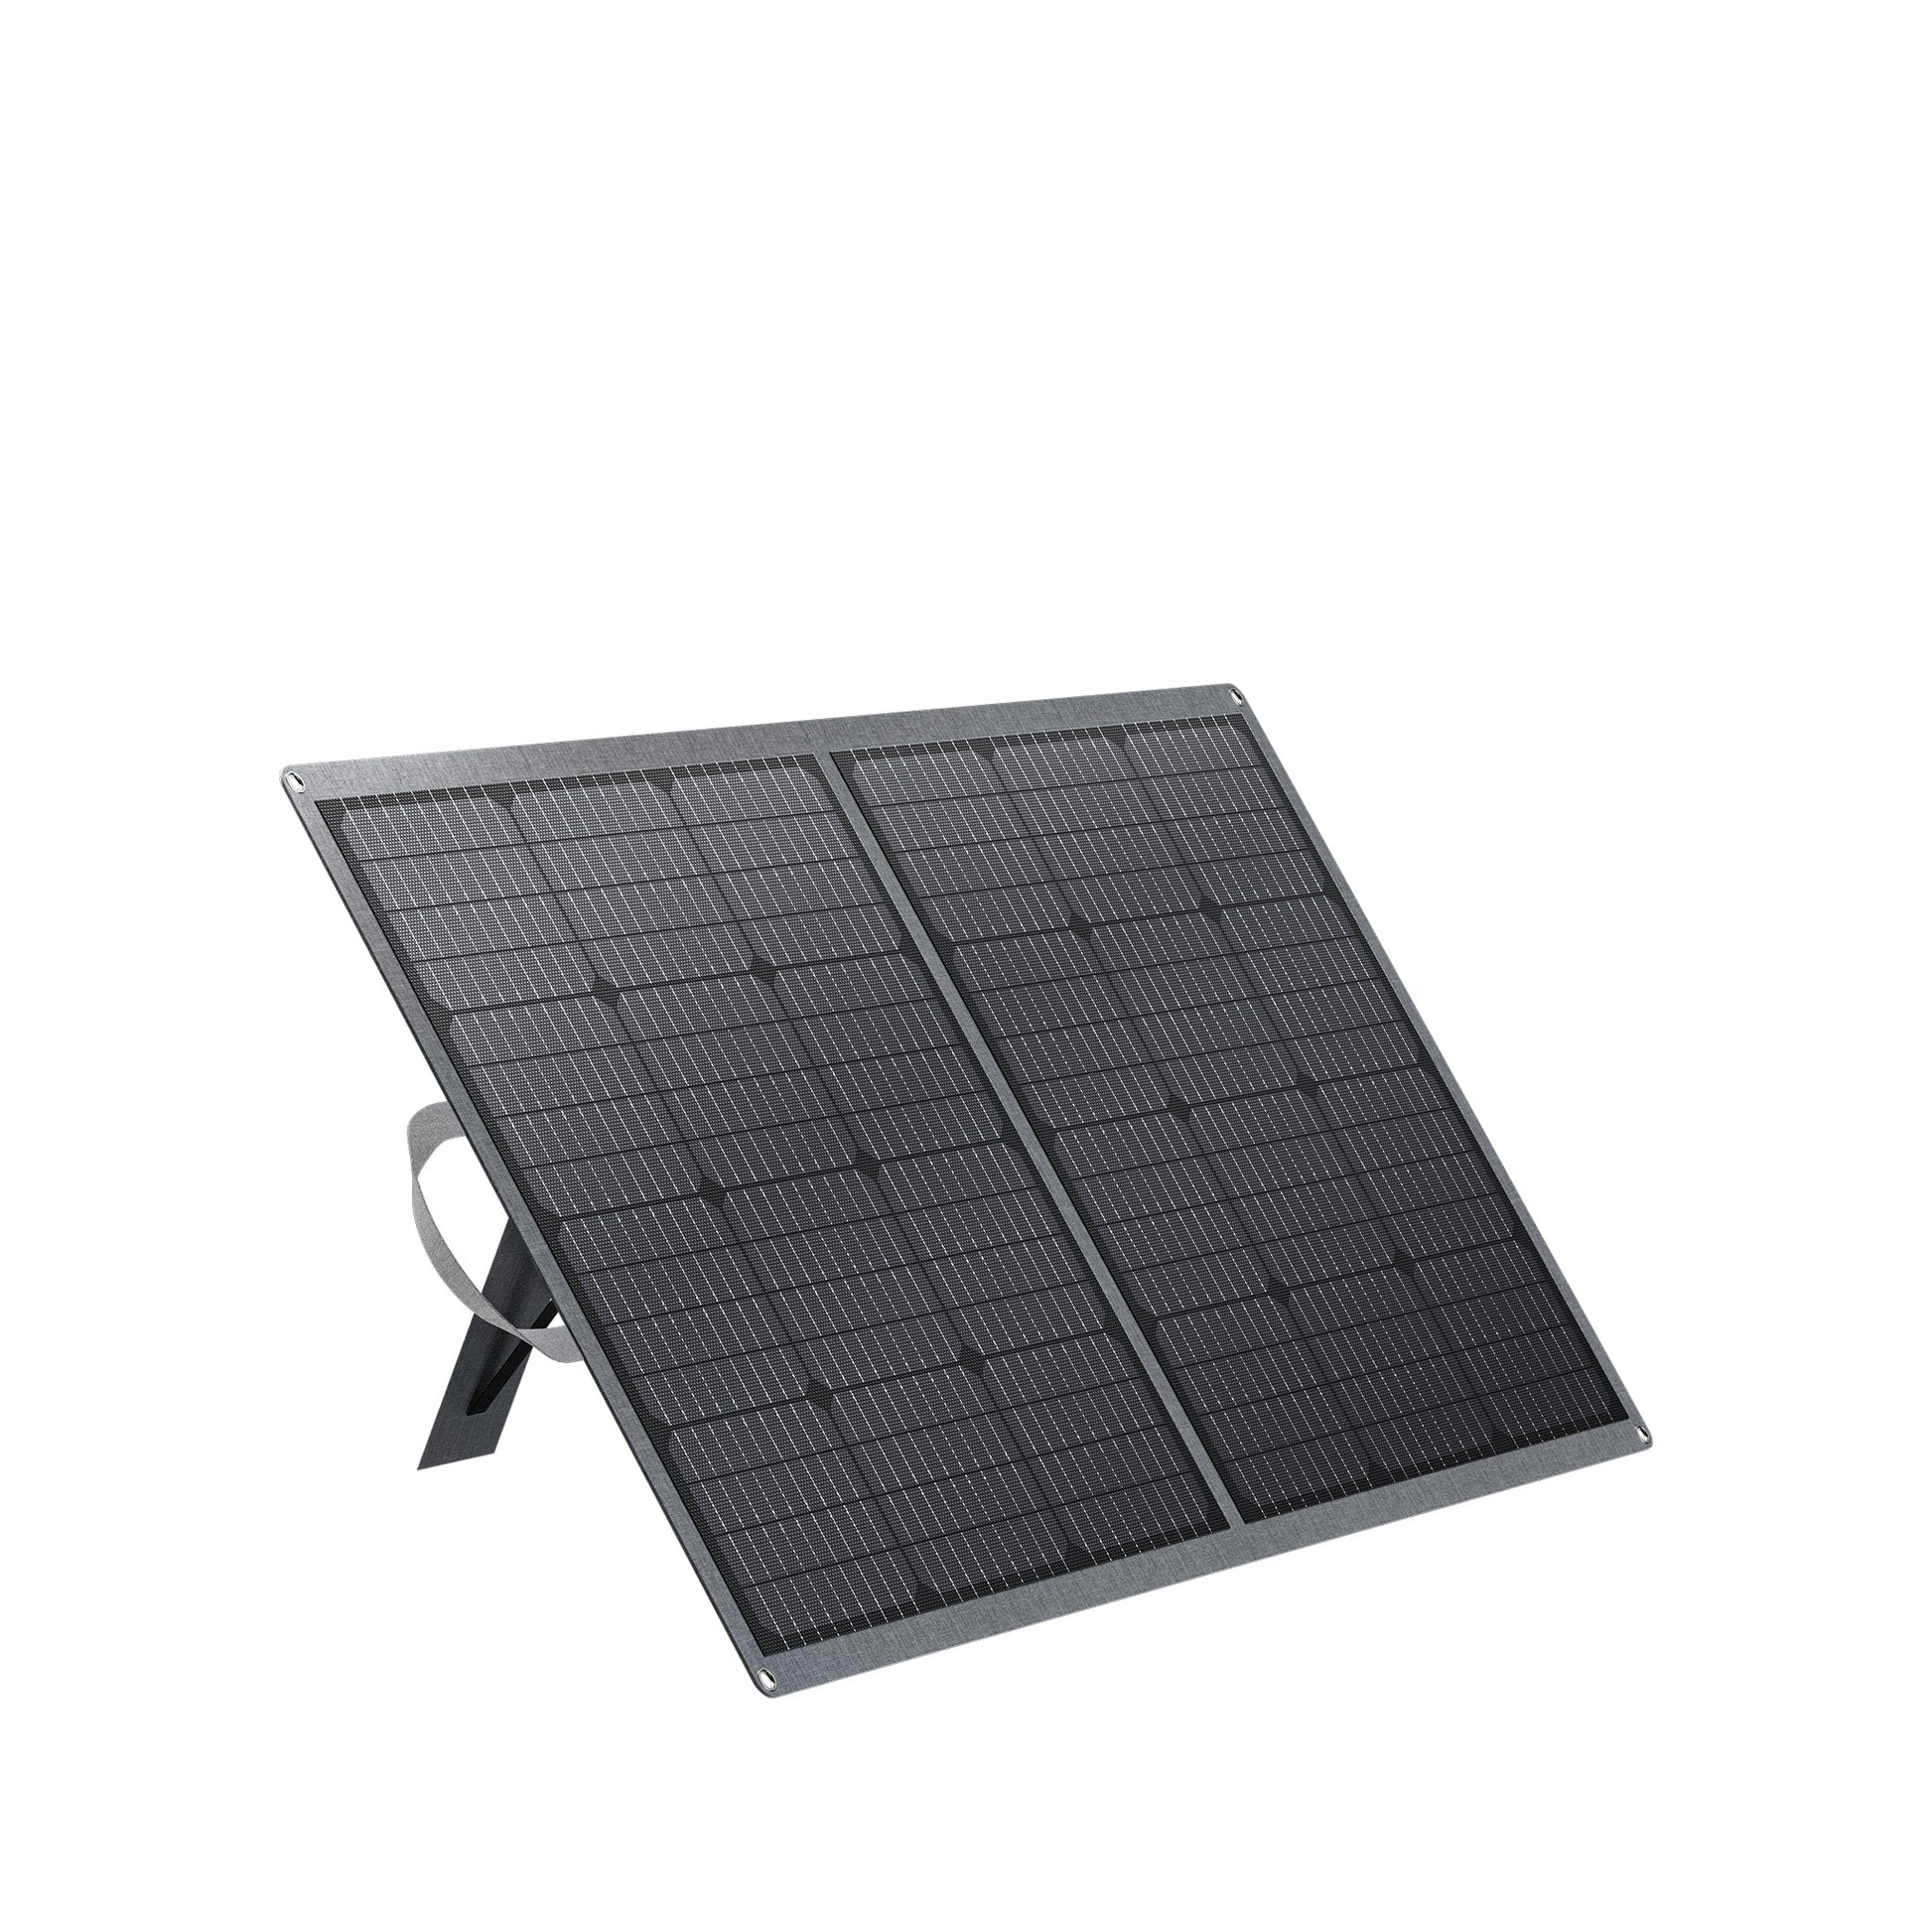 DaranEner SP100 Solar Panel | 100W - DaranEner Portable Power Station